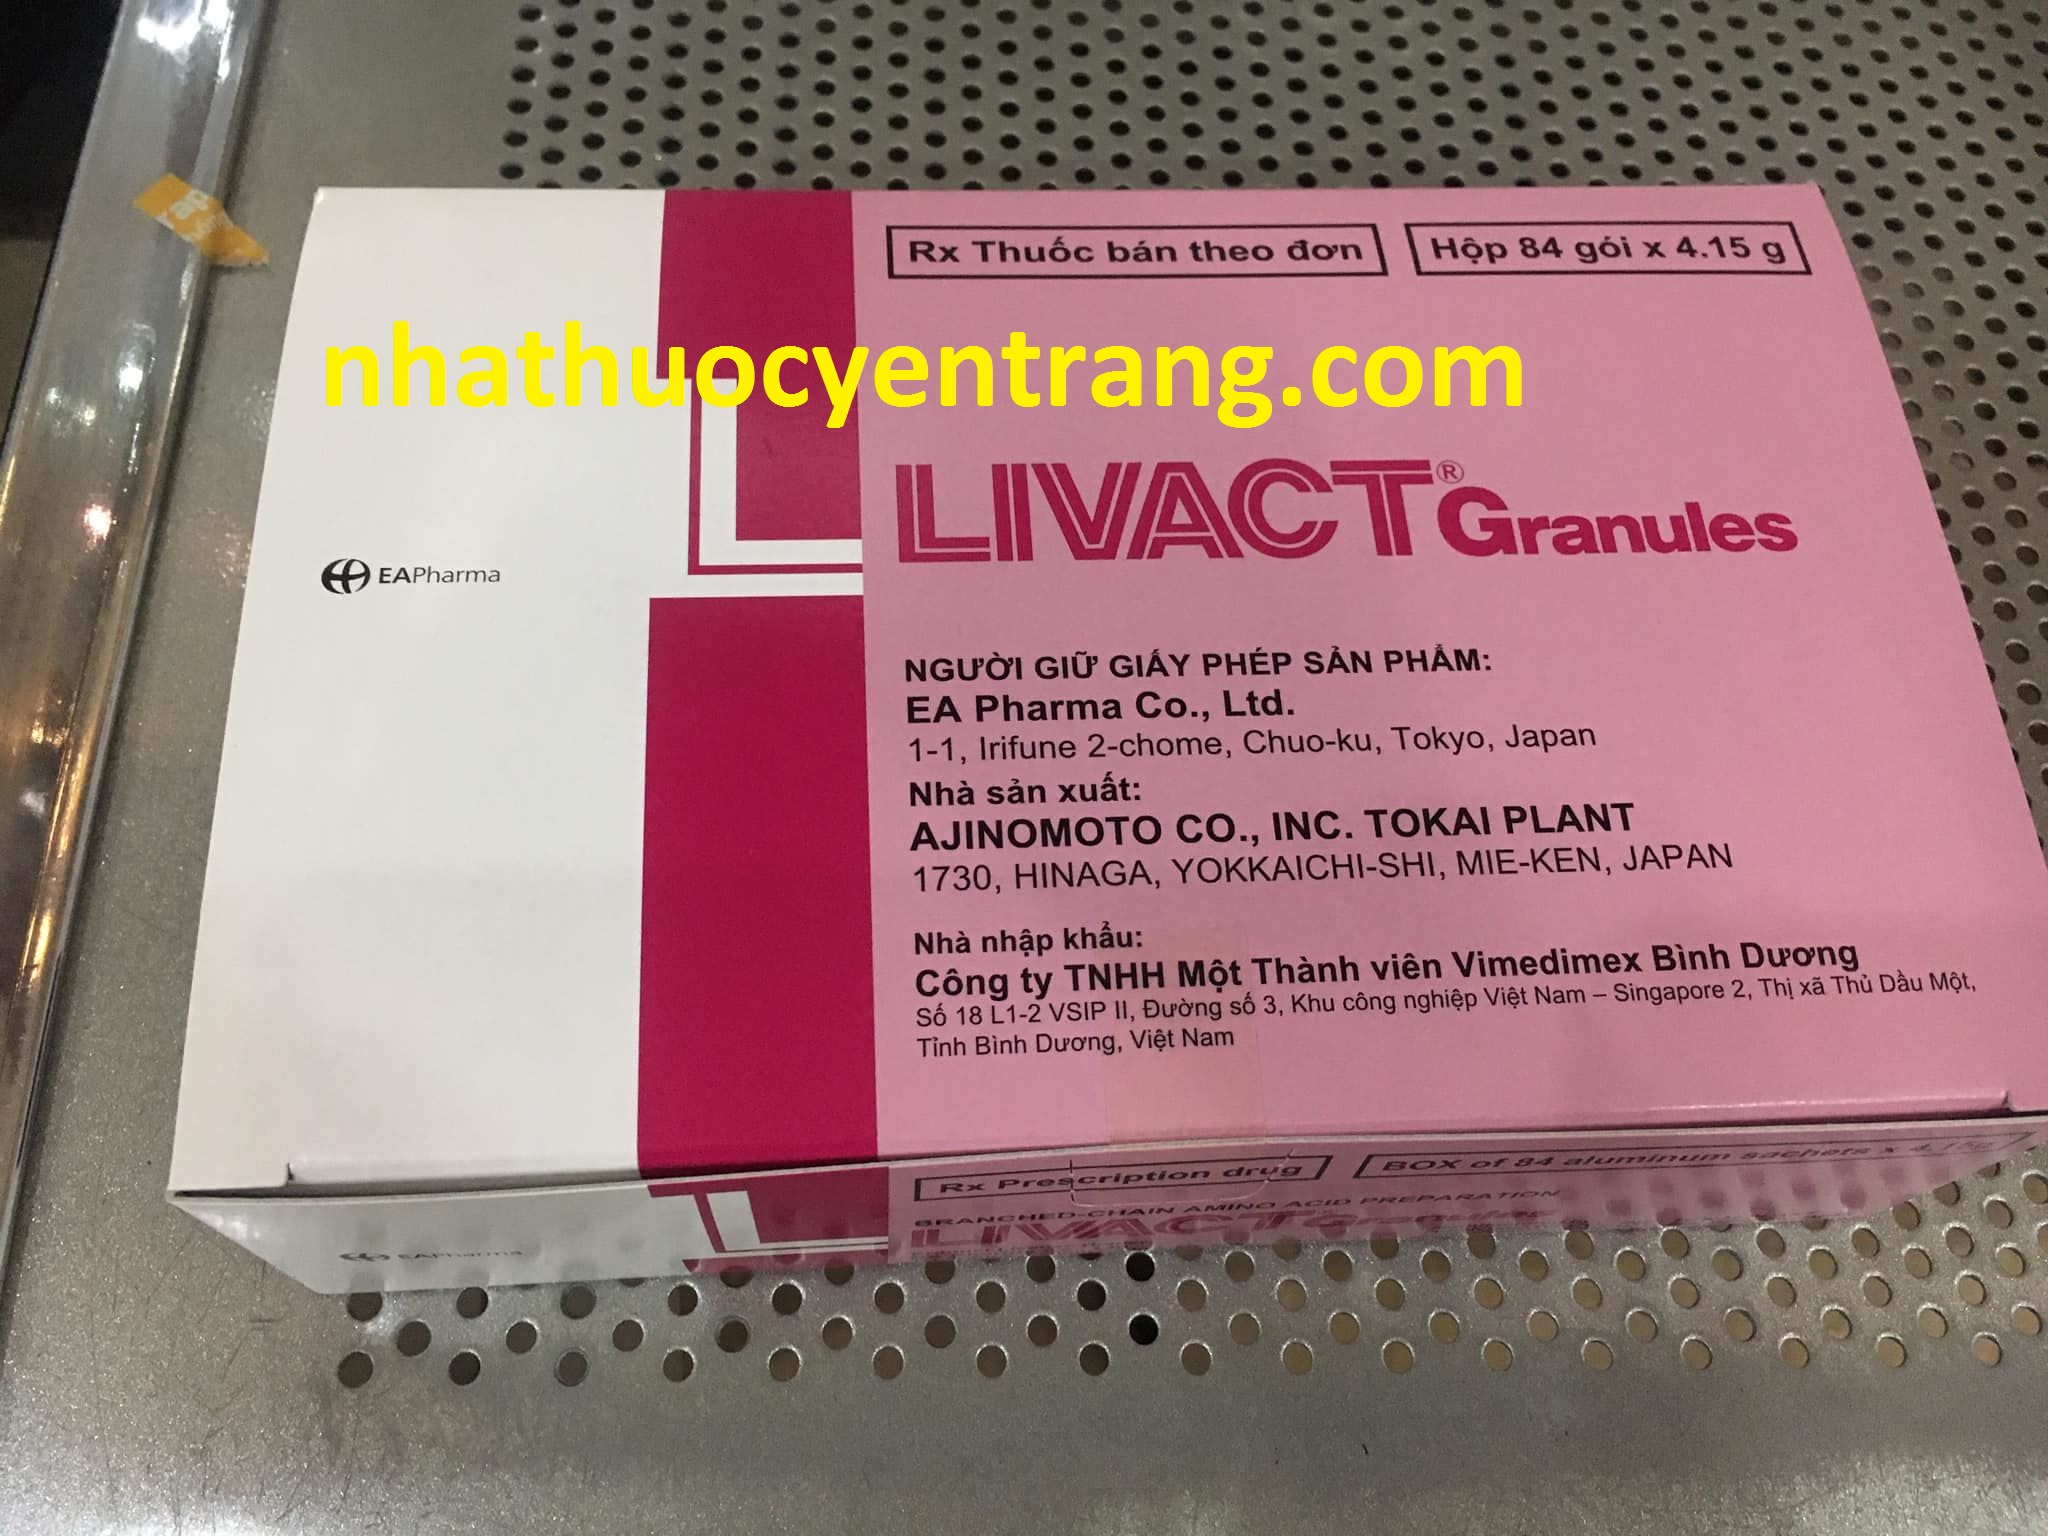 Livact granules